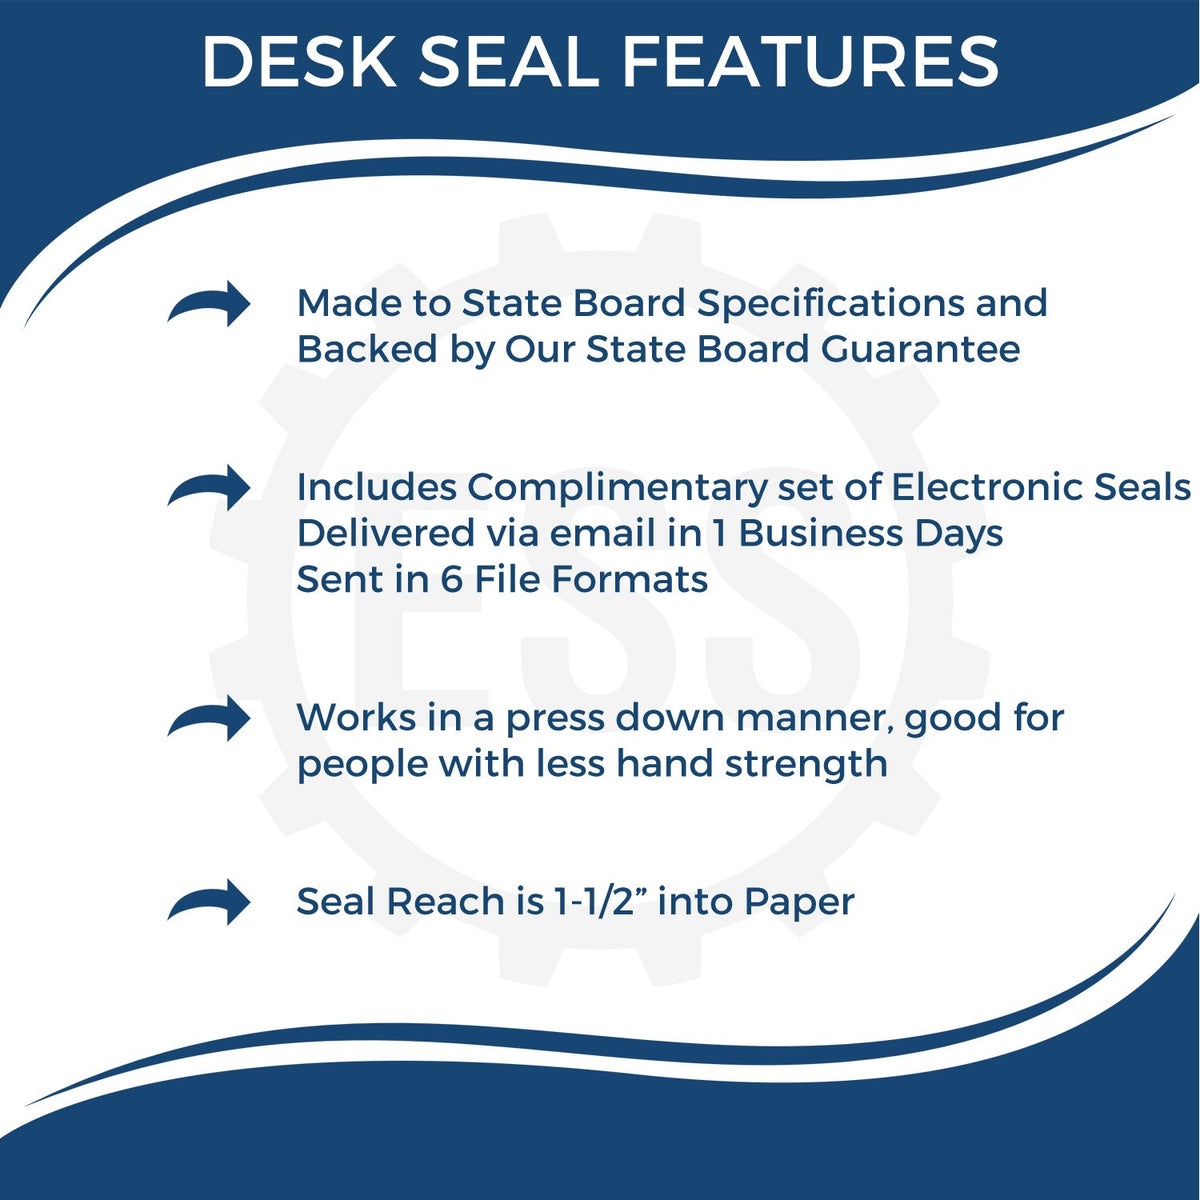 Tennessee Engineer Desk Seal